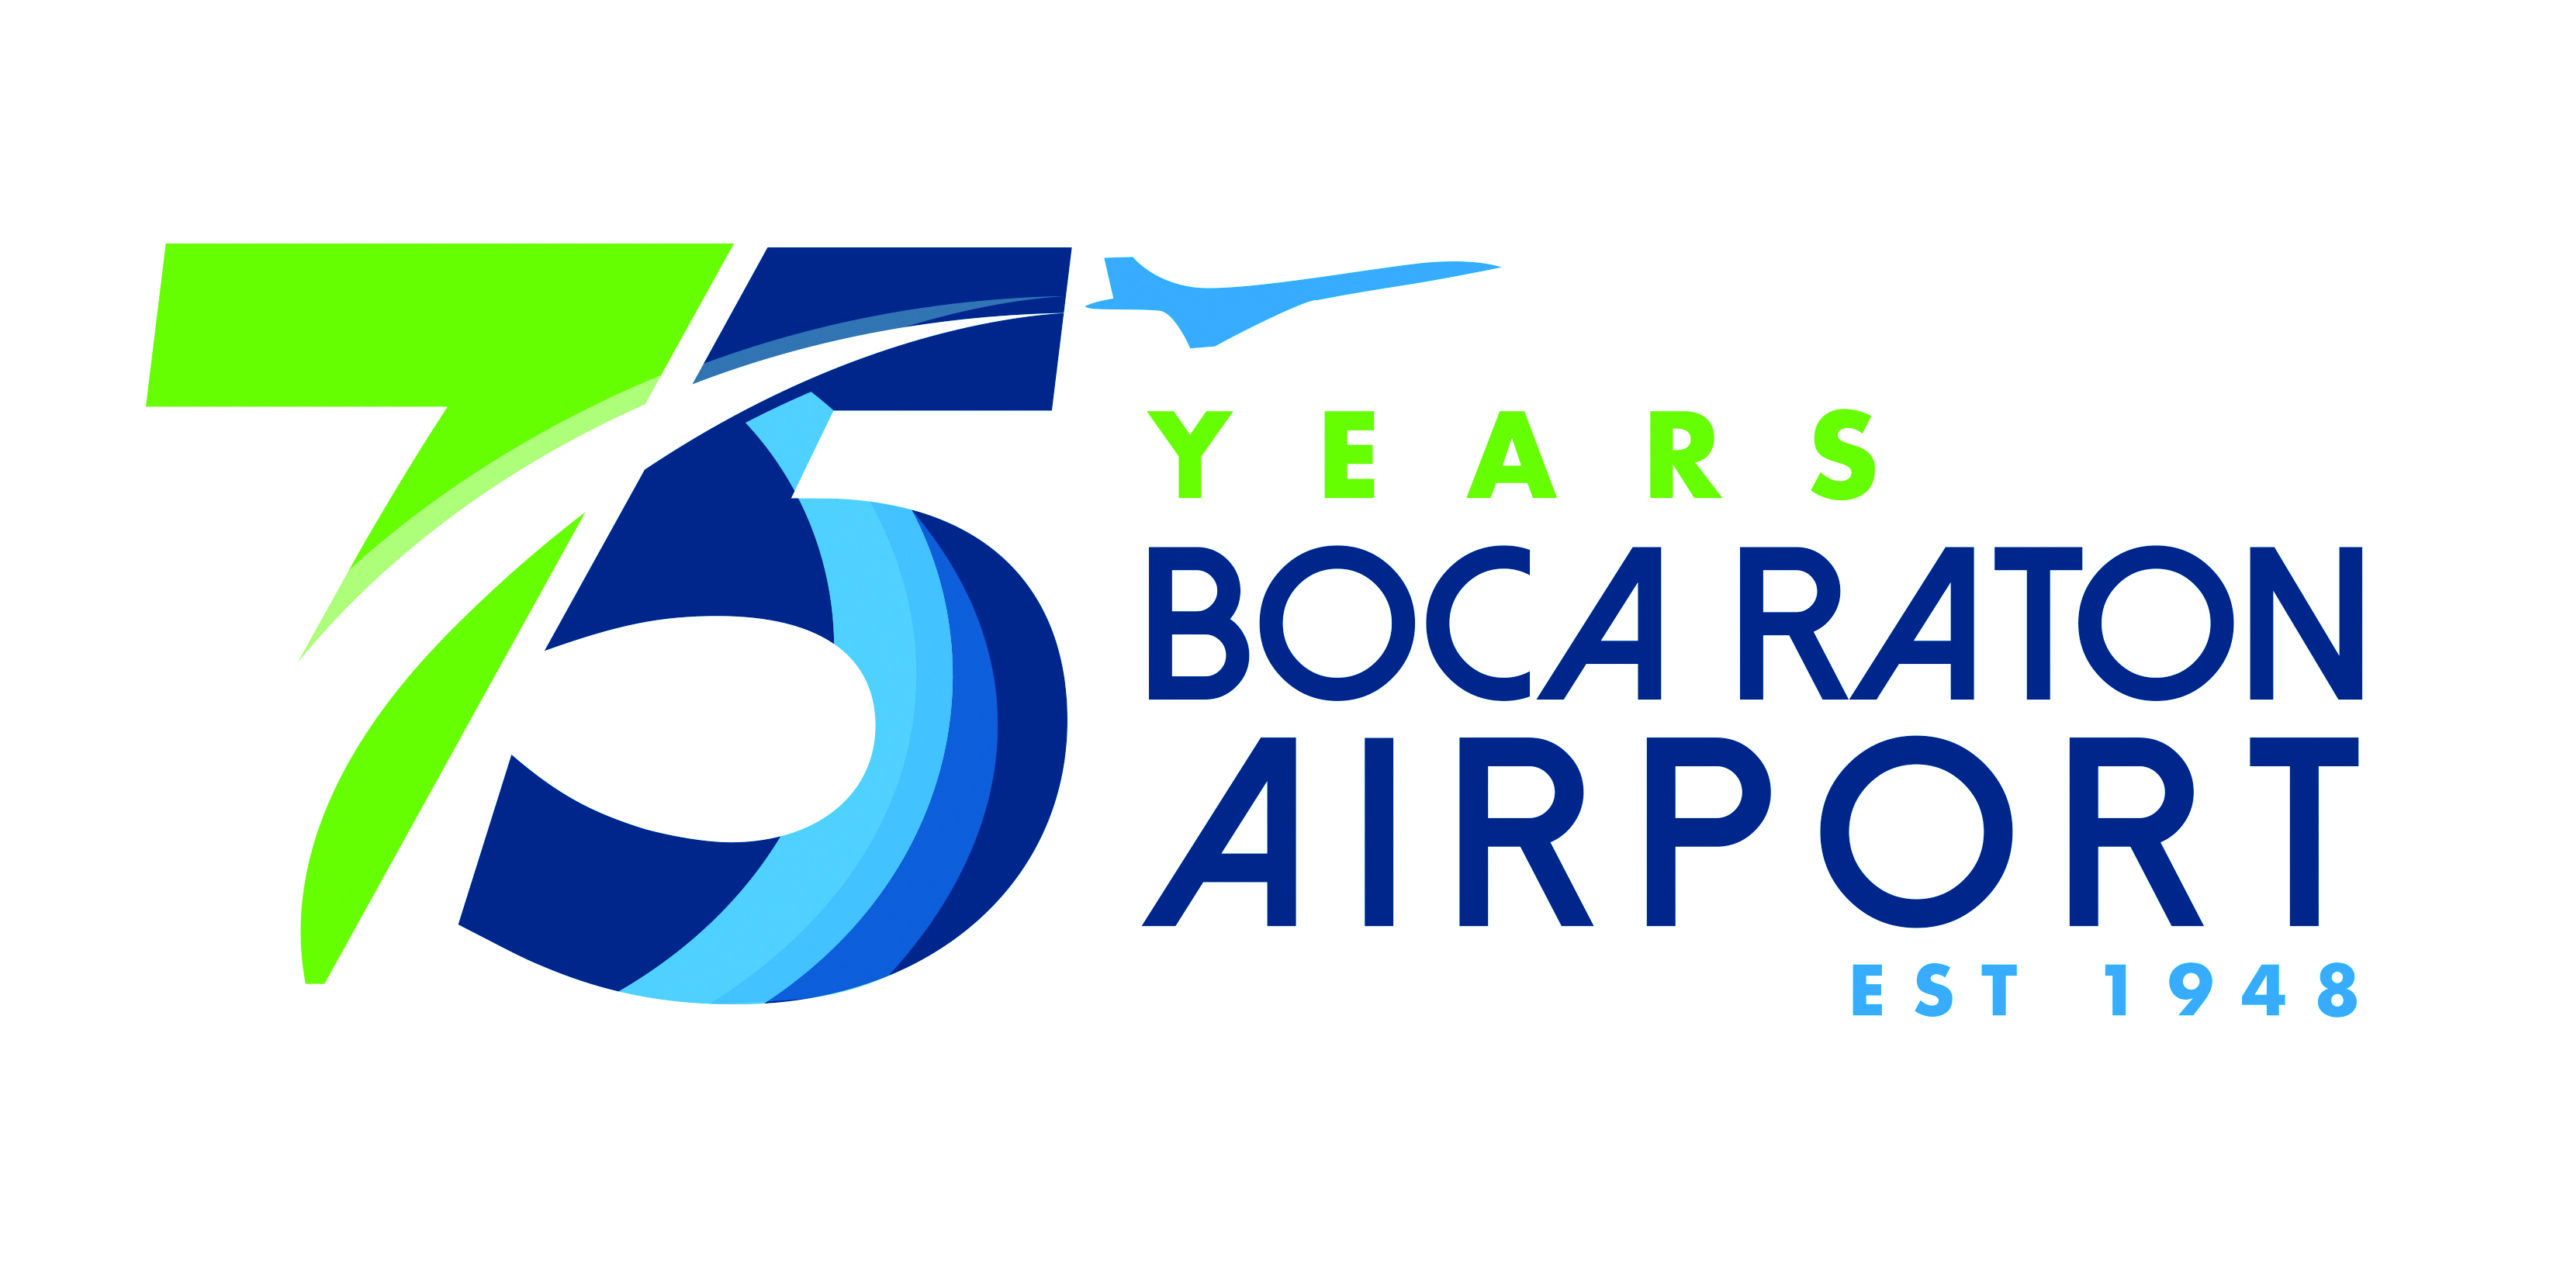 Boca Raton Airport Authority - 75 Years